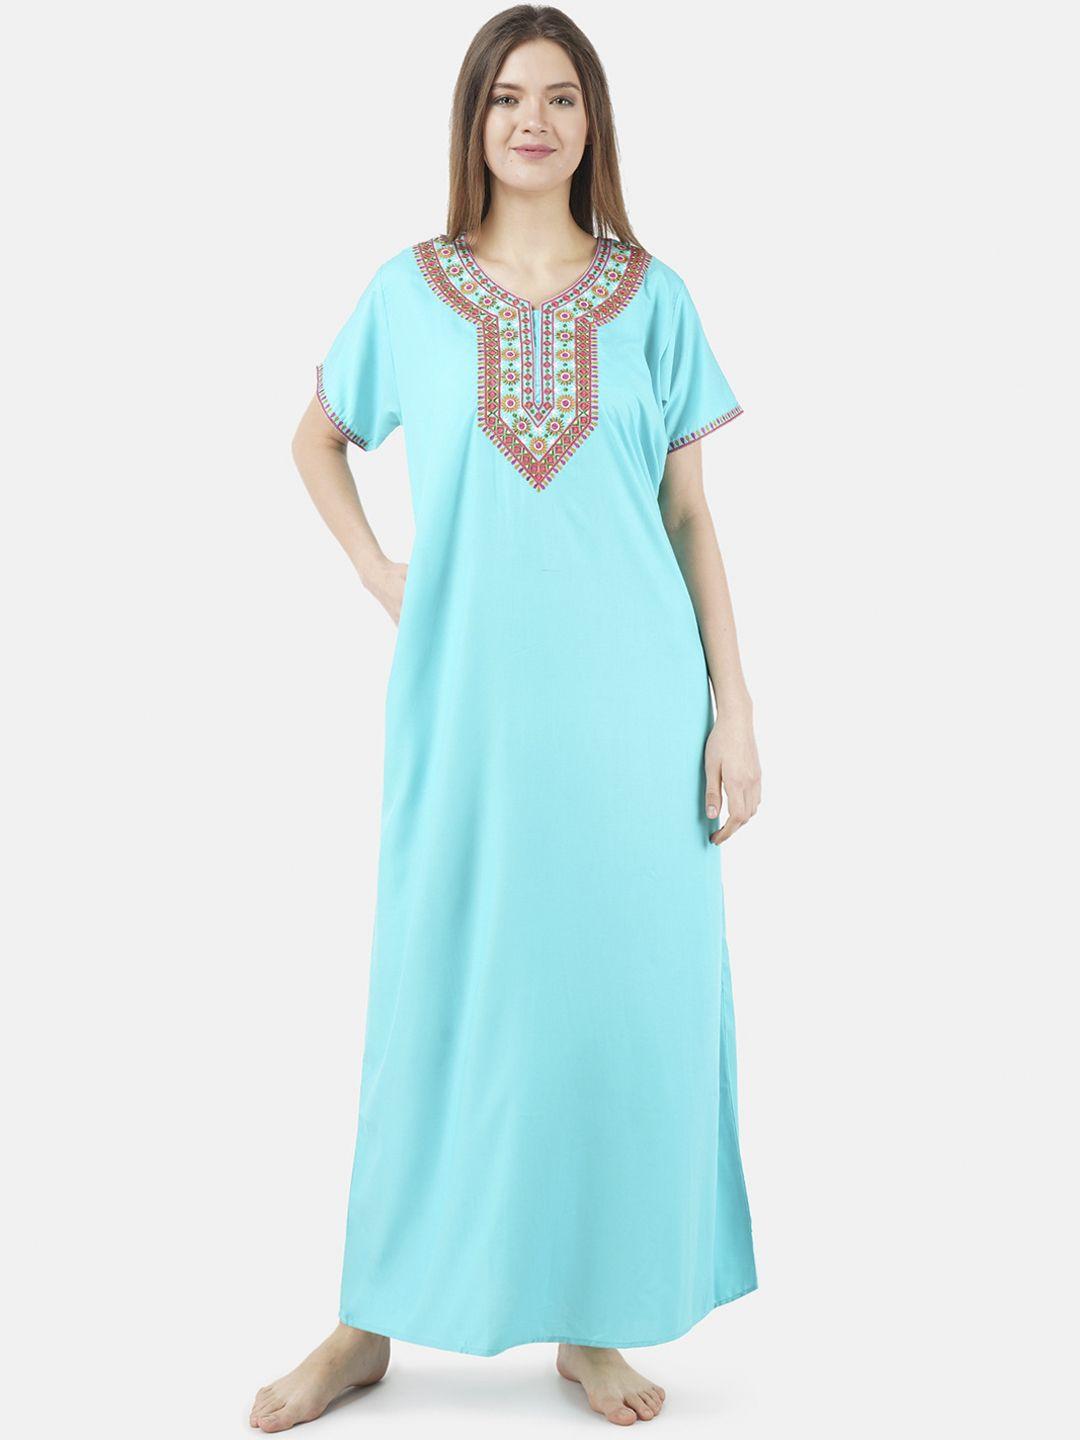 koi-sleepwear-woman-turquoise-blue-embroidered-cotton-maxi-nightdress